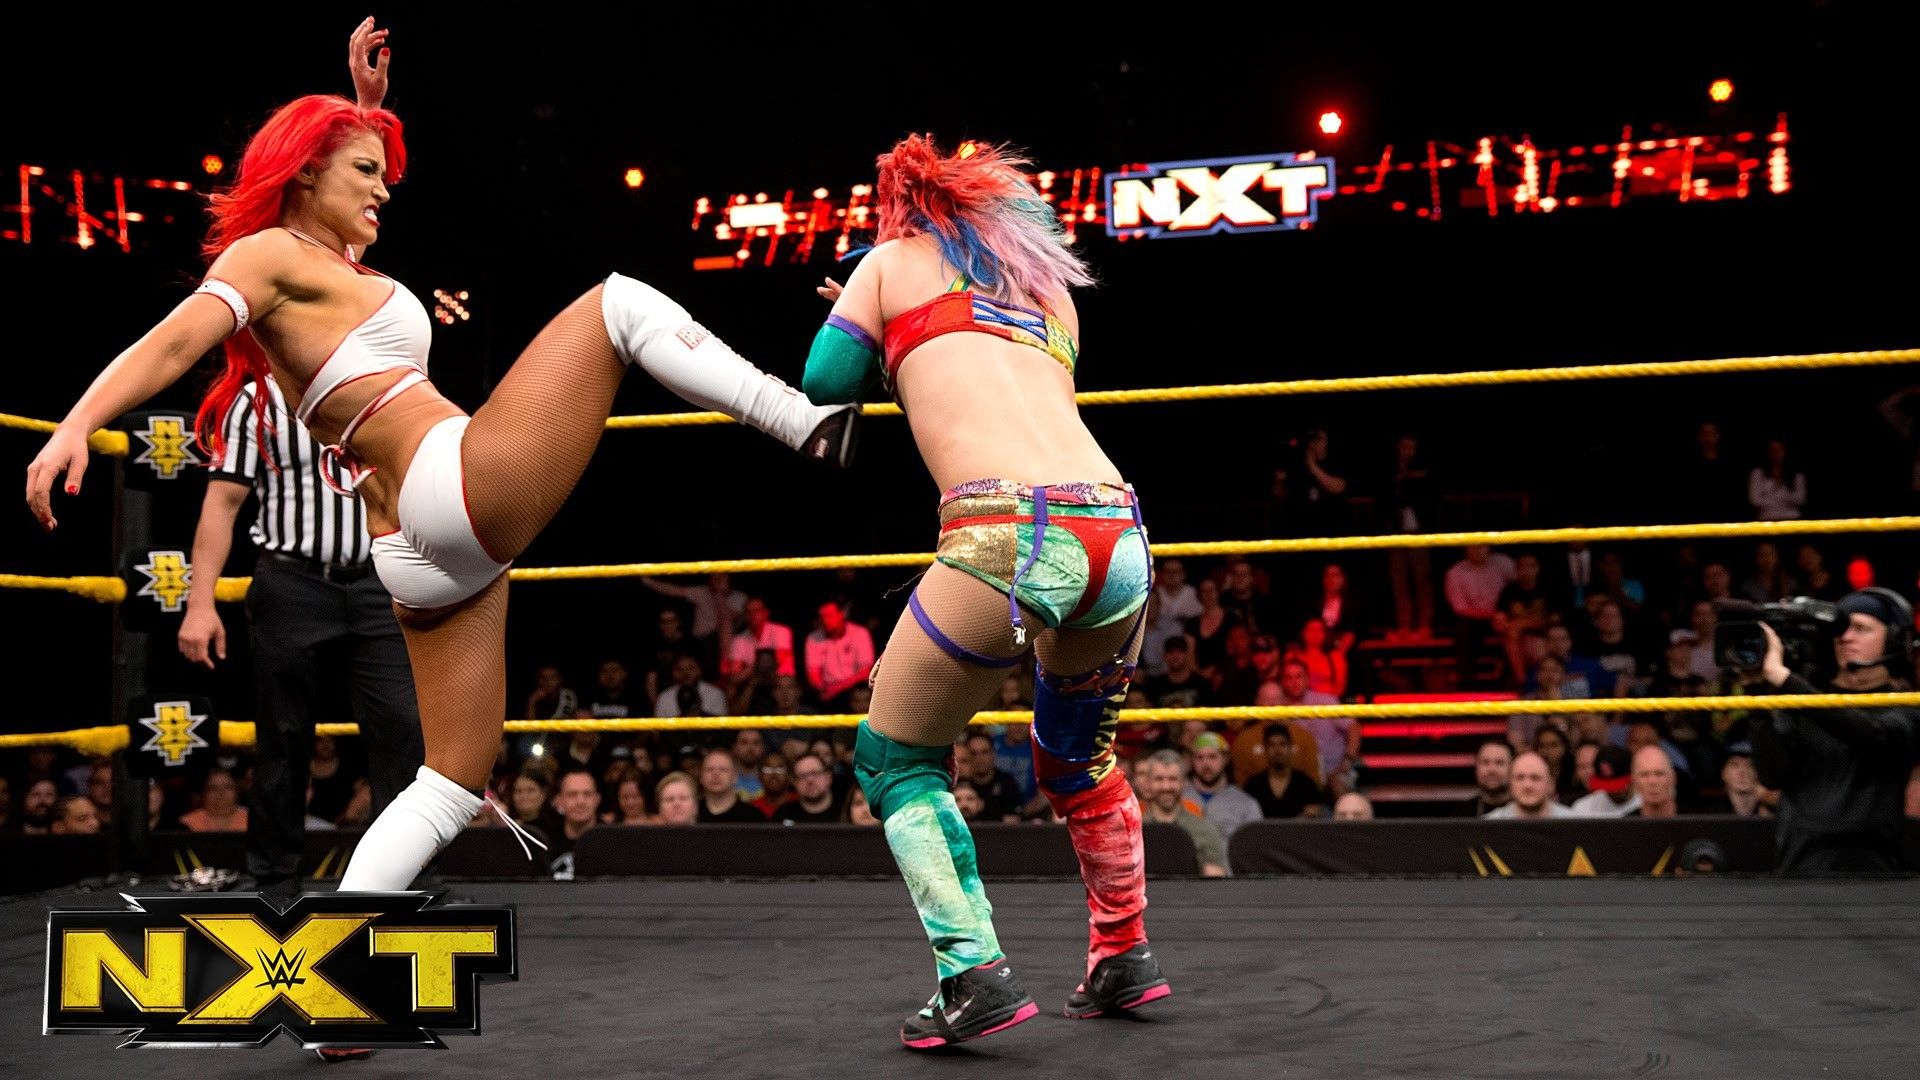 Asuka Vs Eva Marie in Girls Fight of WWE HD Wallpapers.